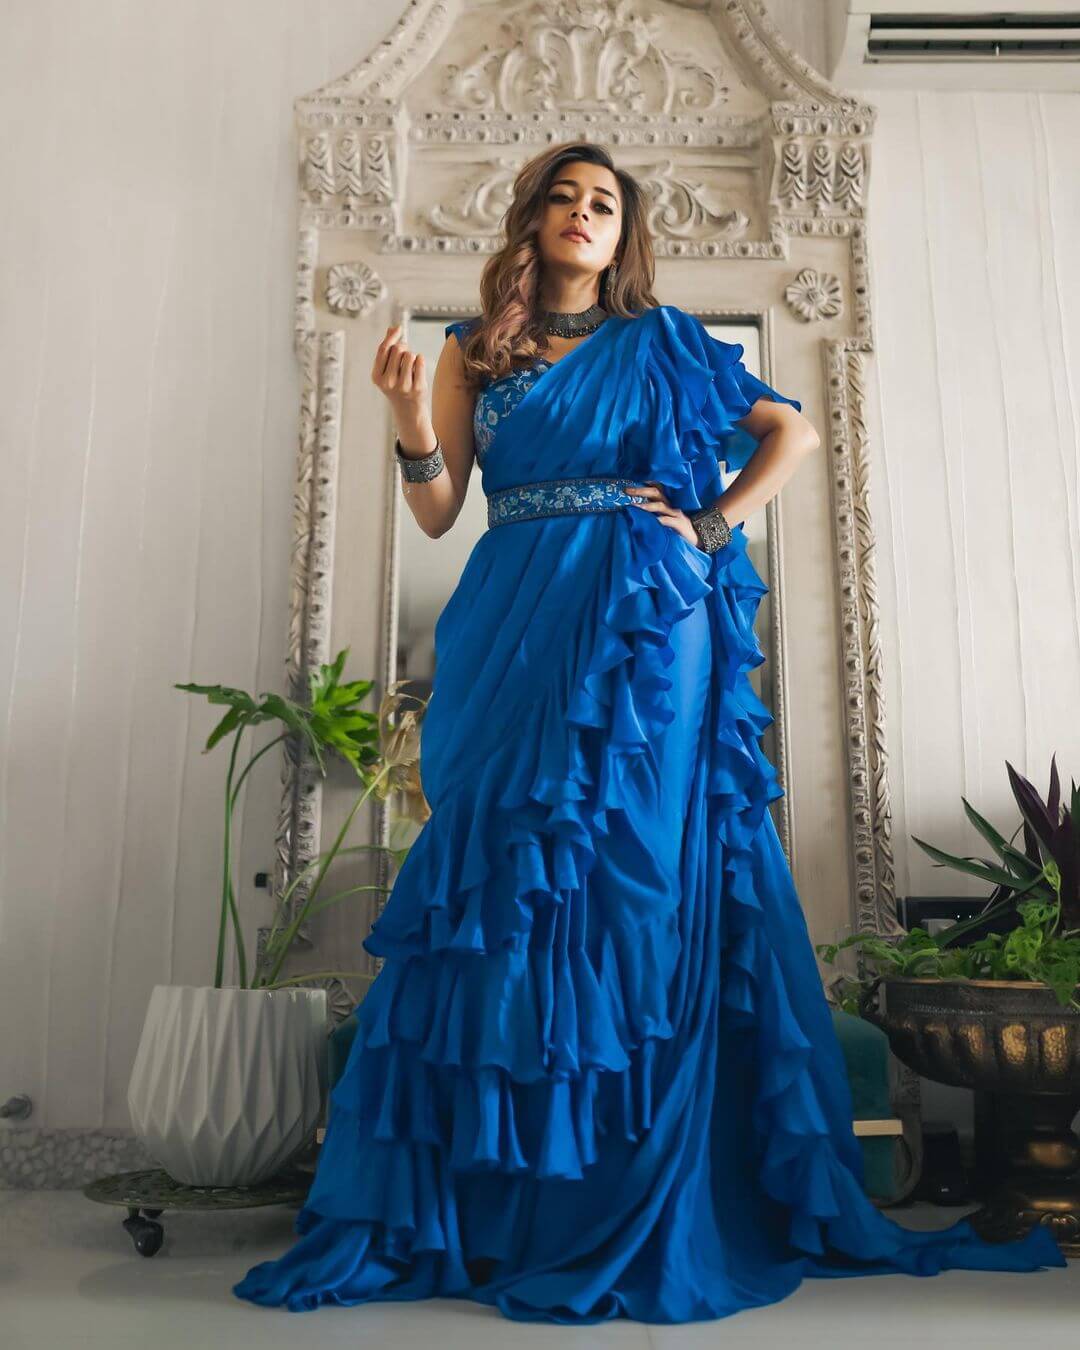 Tina Datta Rocks the Modern Woman Look in a Blue Saree